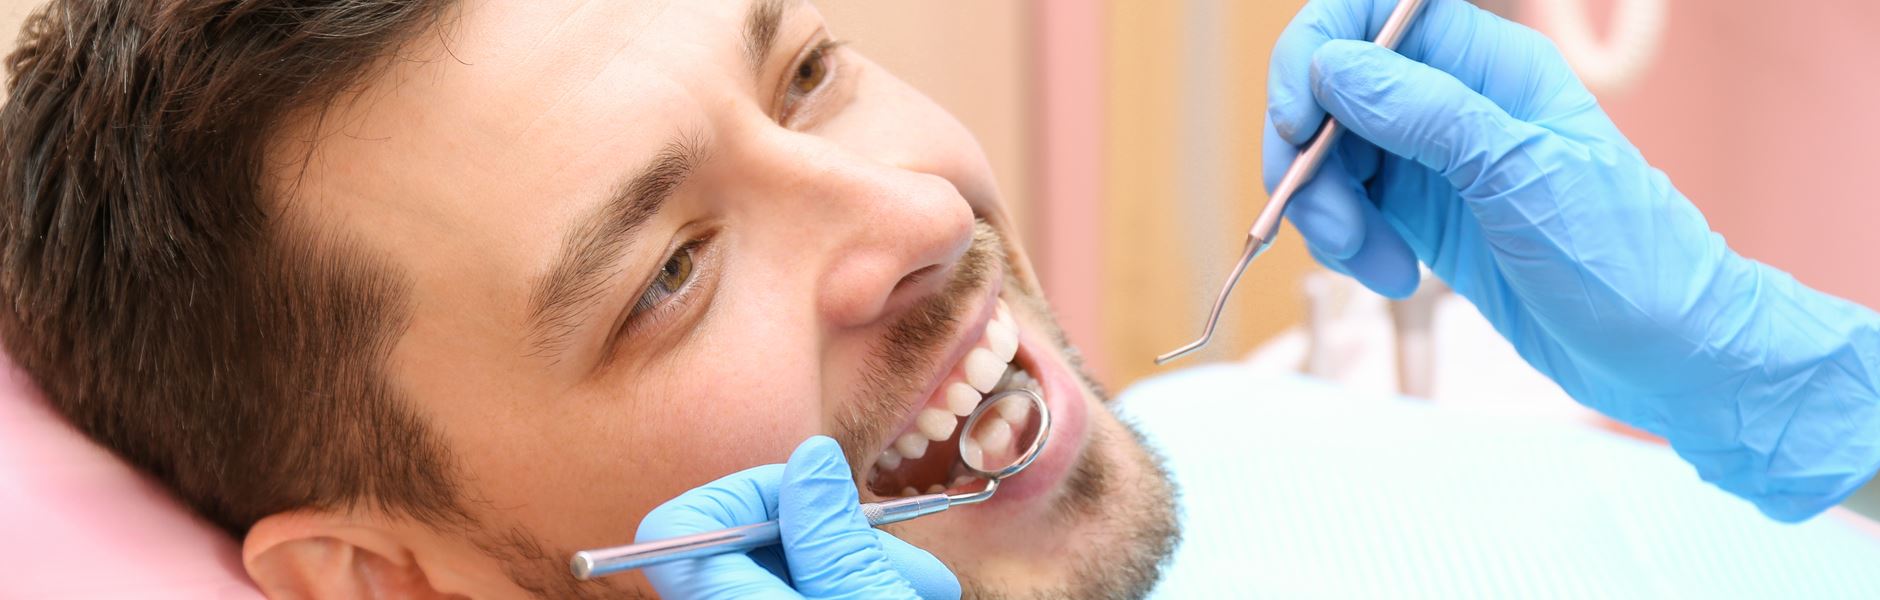 Dentist examining patient's teeth after Porcelain Bridges treatment